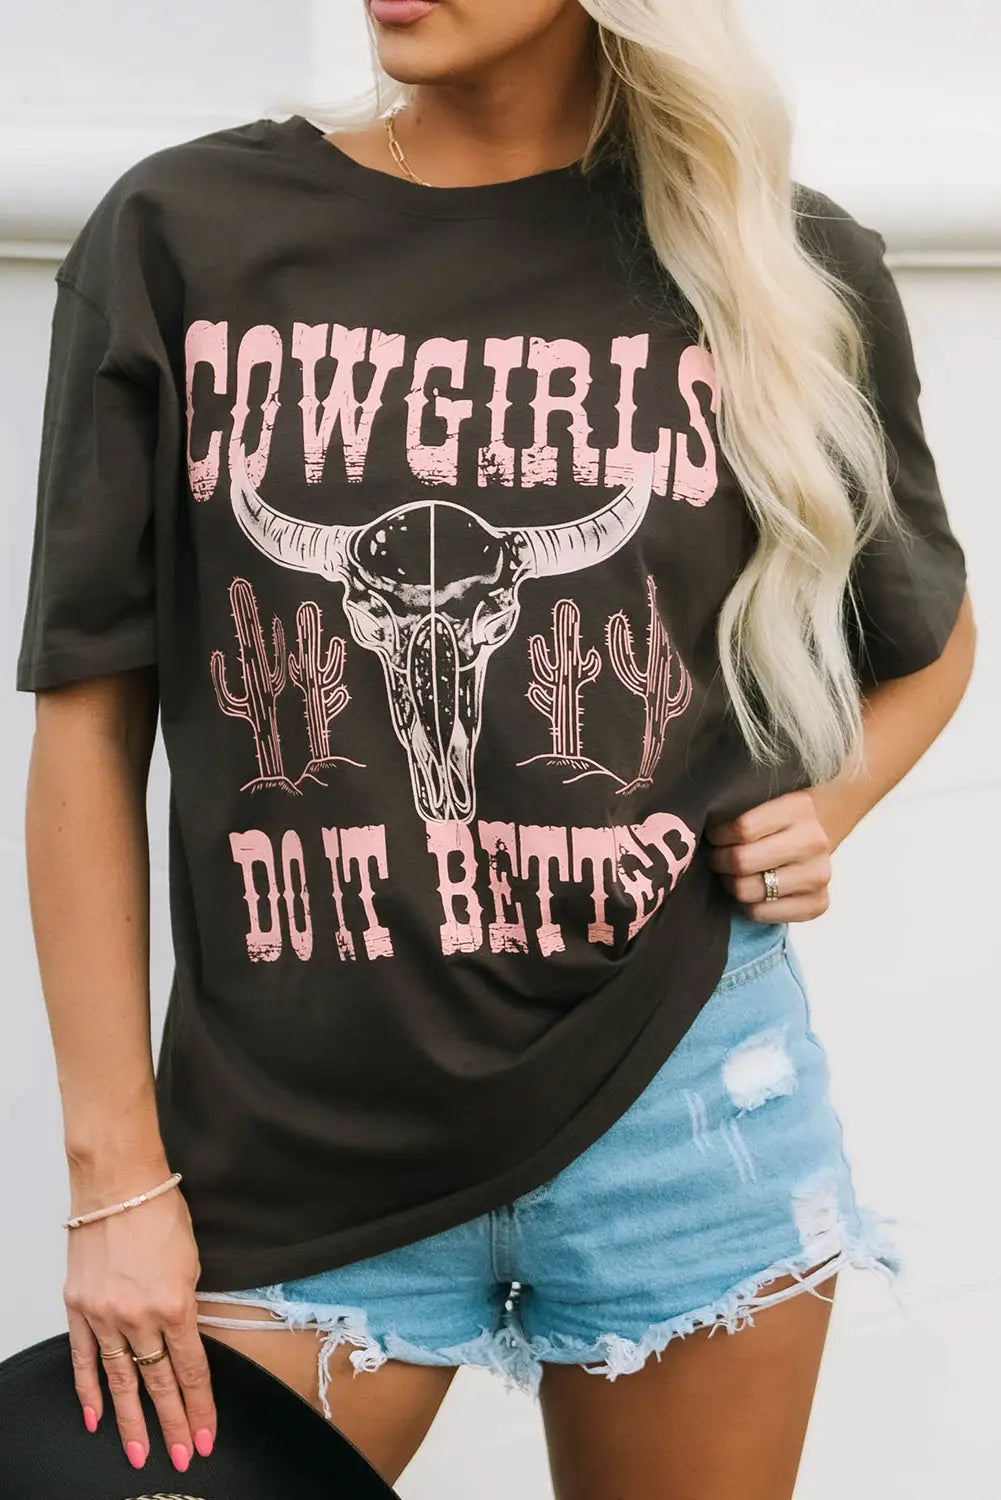 Gray cowgirls do it better graphic print oversized t shirt - t-shirts